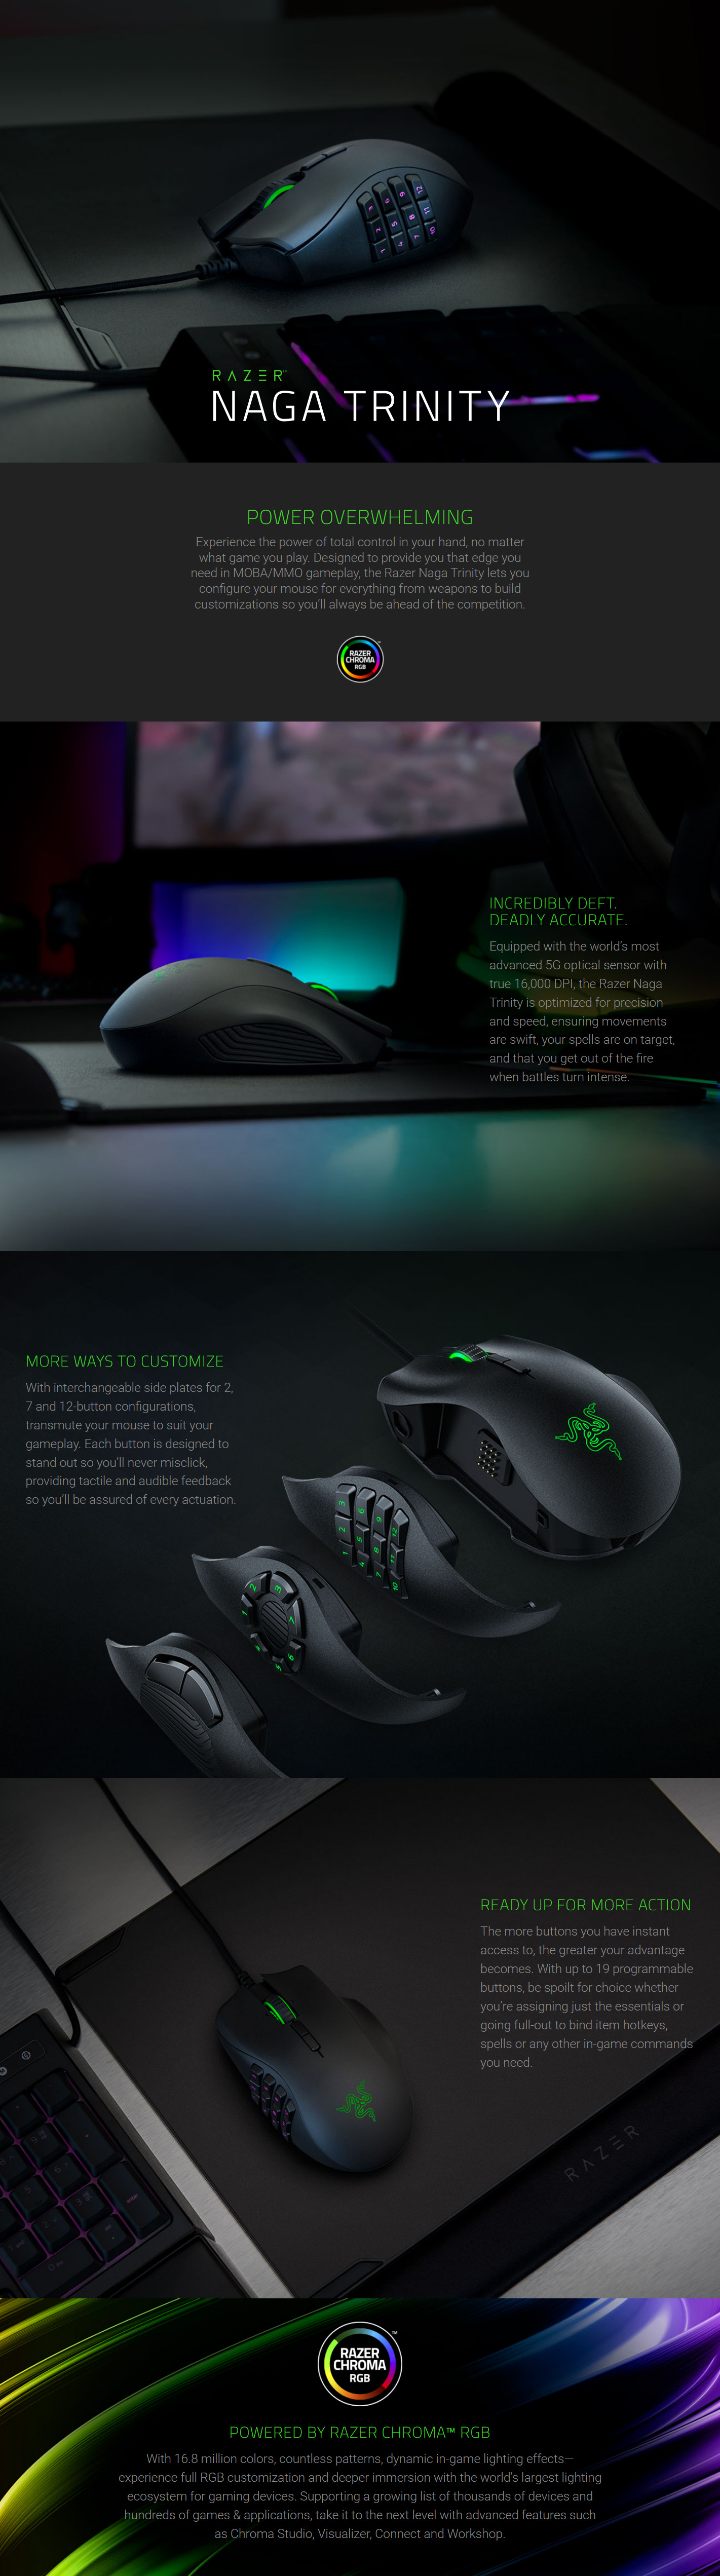 Razer-Naga-Trinity-RGB-Wired-MMO-Gaming-Mouse-1